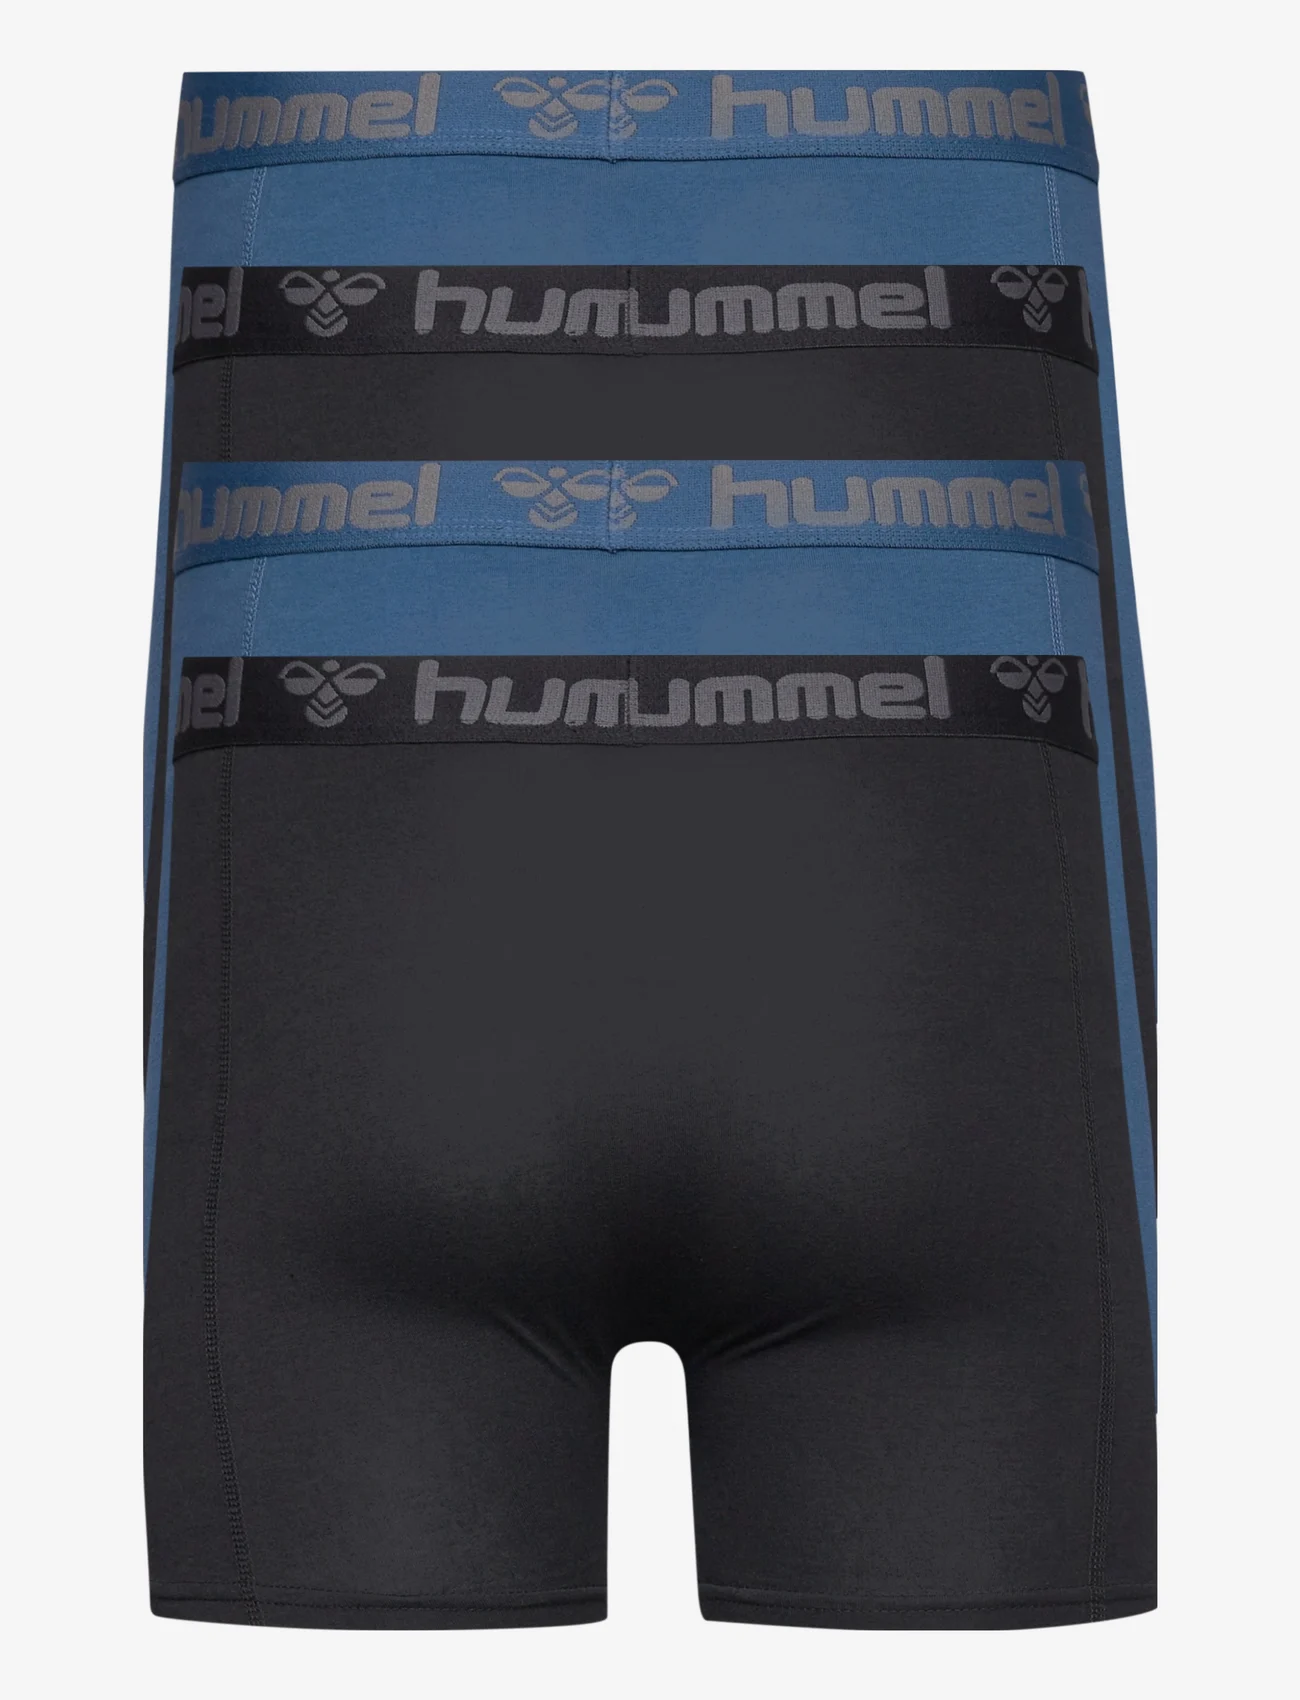 Hummel - hmlMARSTON 4-PACK BOXERS - lowest prices - black/insigina blue - 1